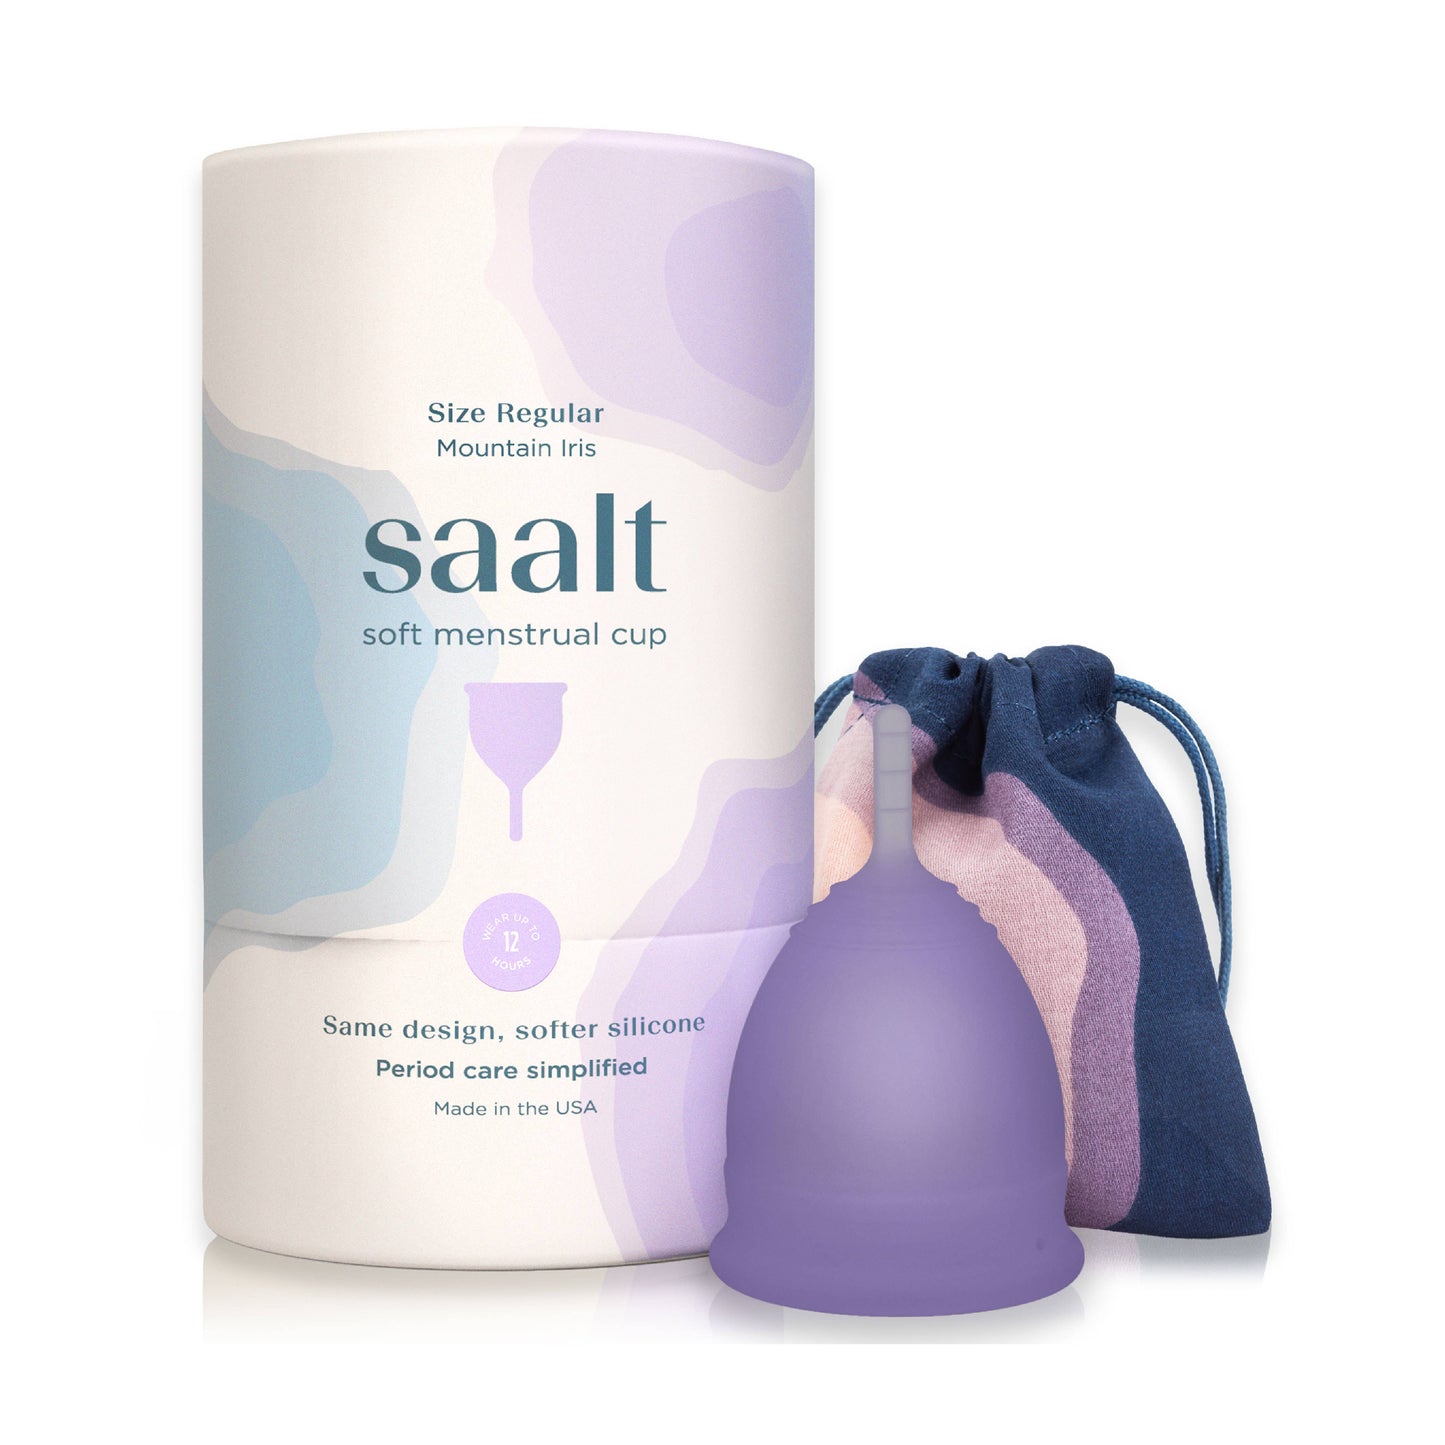 Saalt - Saalt Soft Menstrual Cup: Small / Desert Blush Saalt